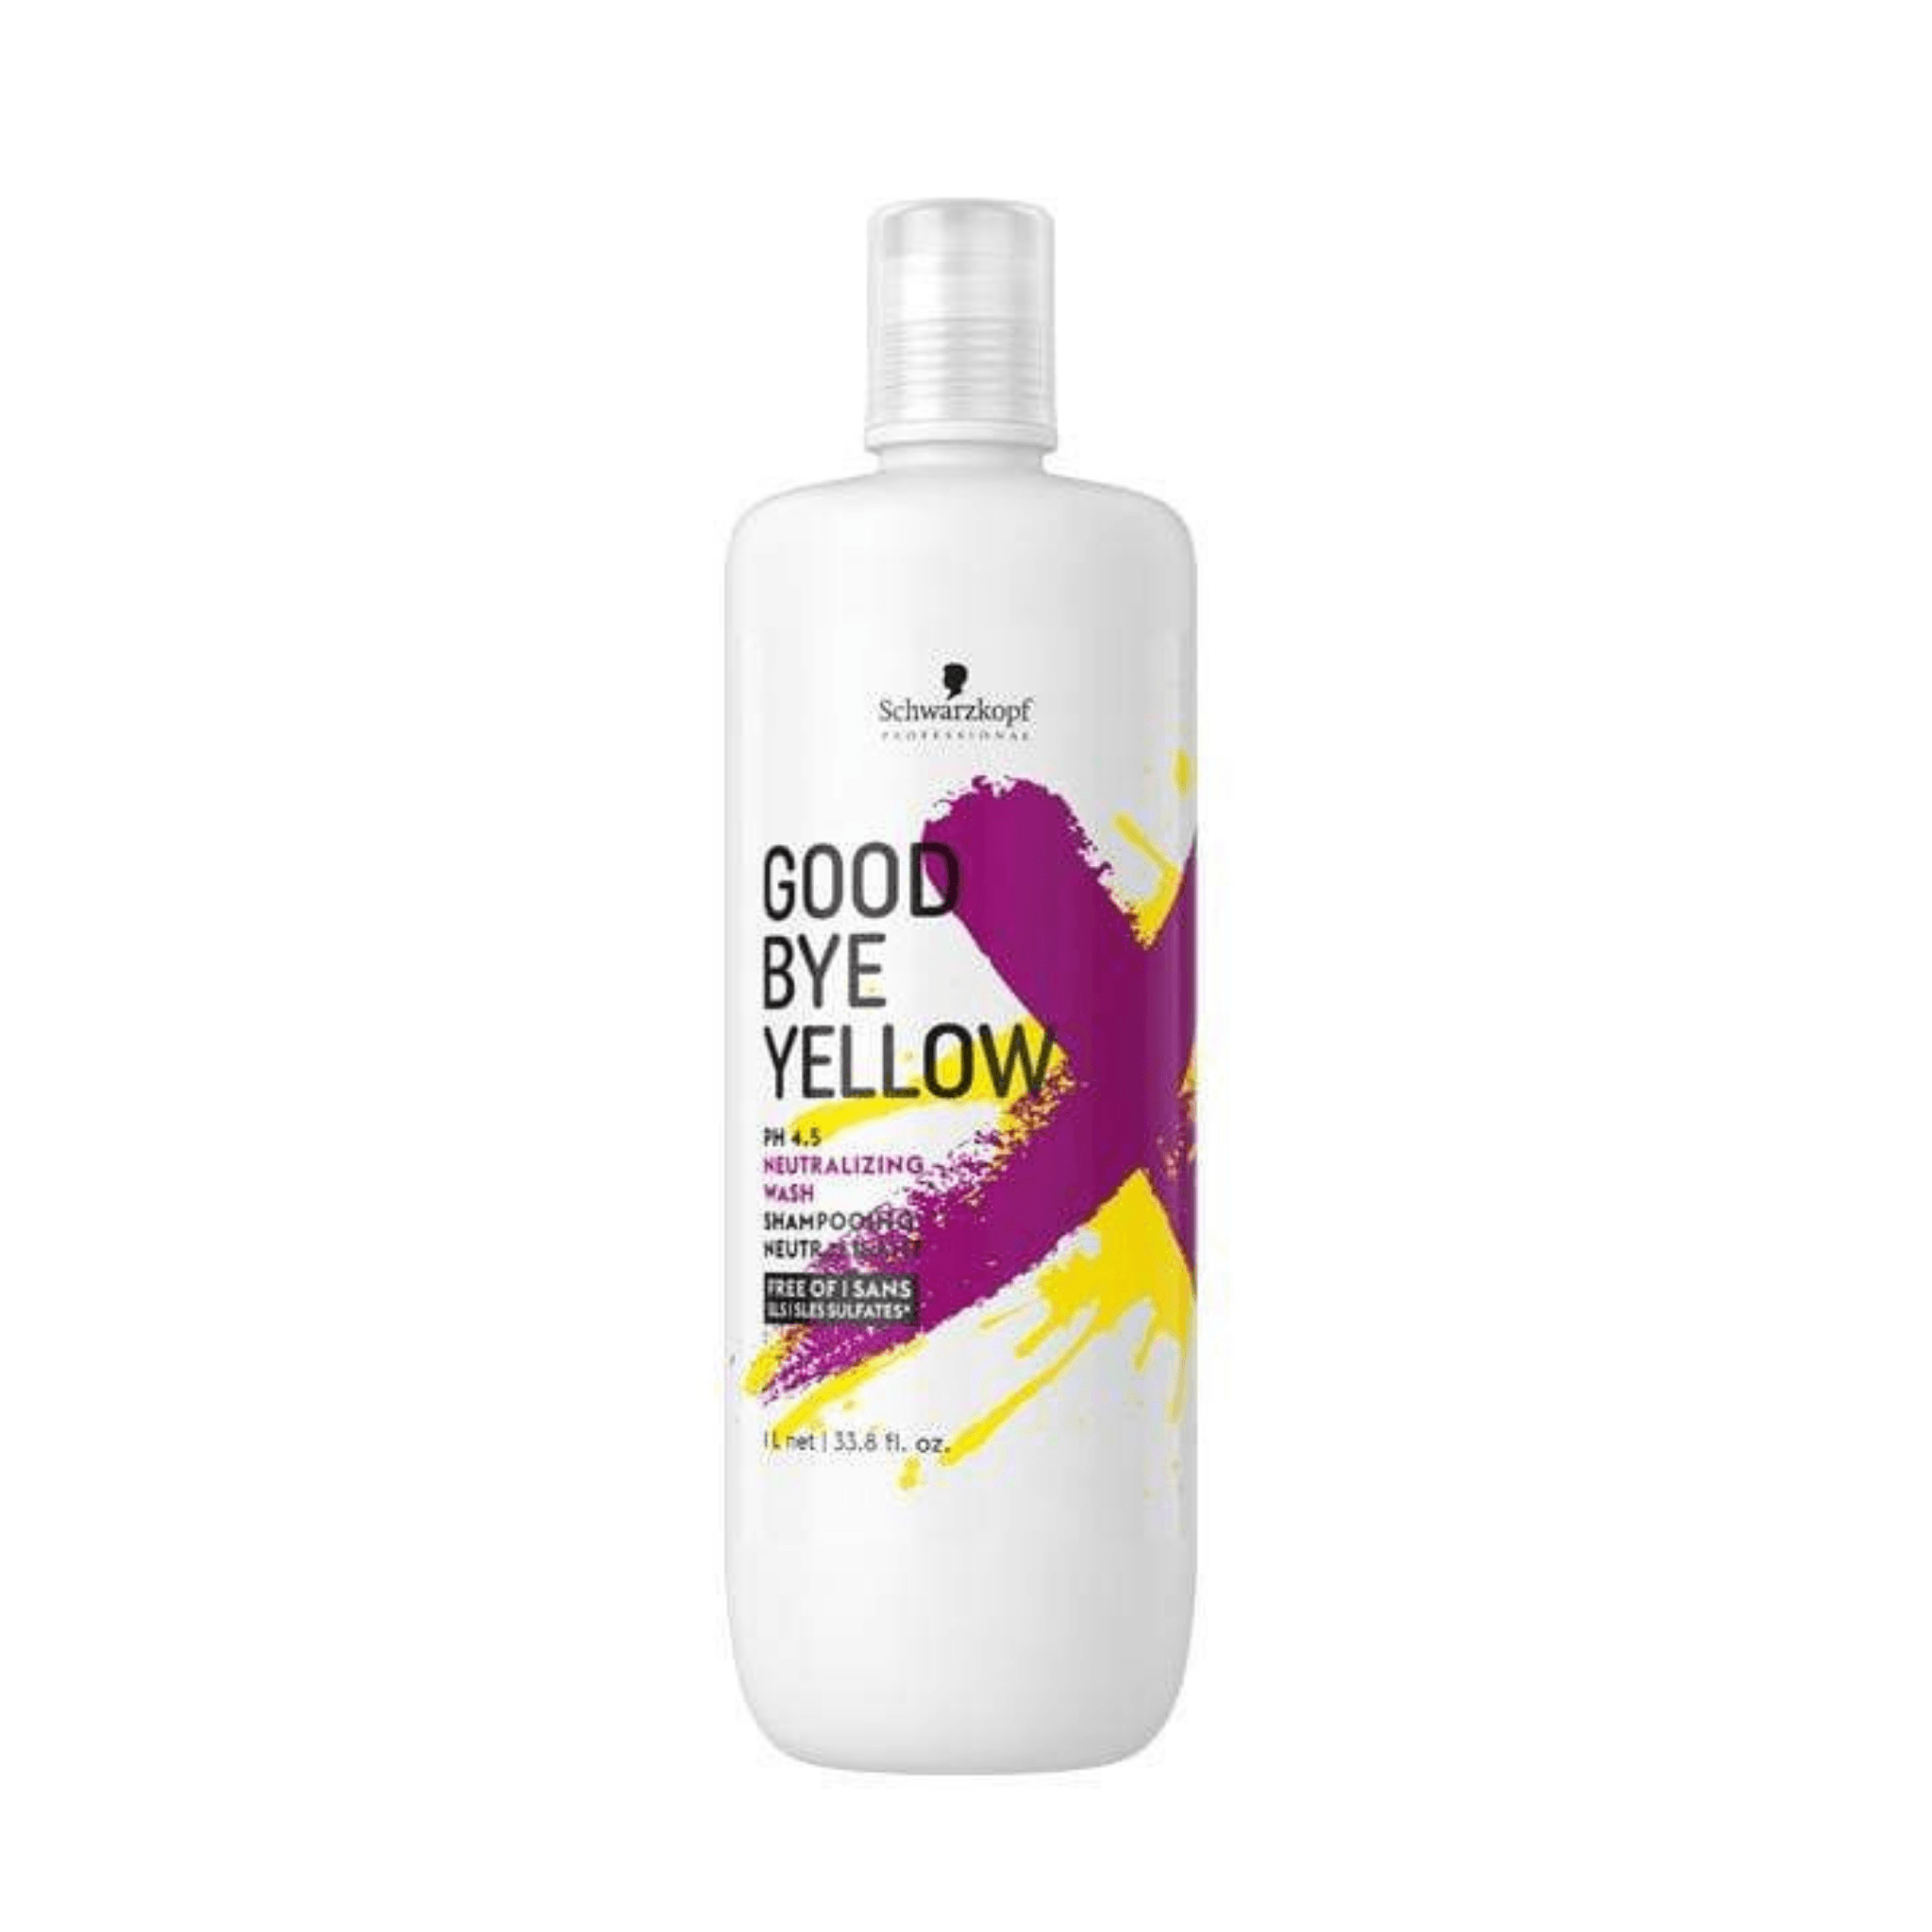 Schwarzkopf. GoodBye Yellow Shampoing Neutralisant - litre - Concept C. Shop